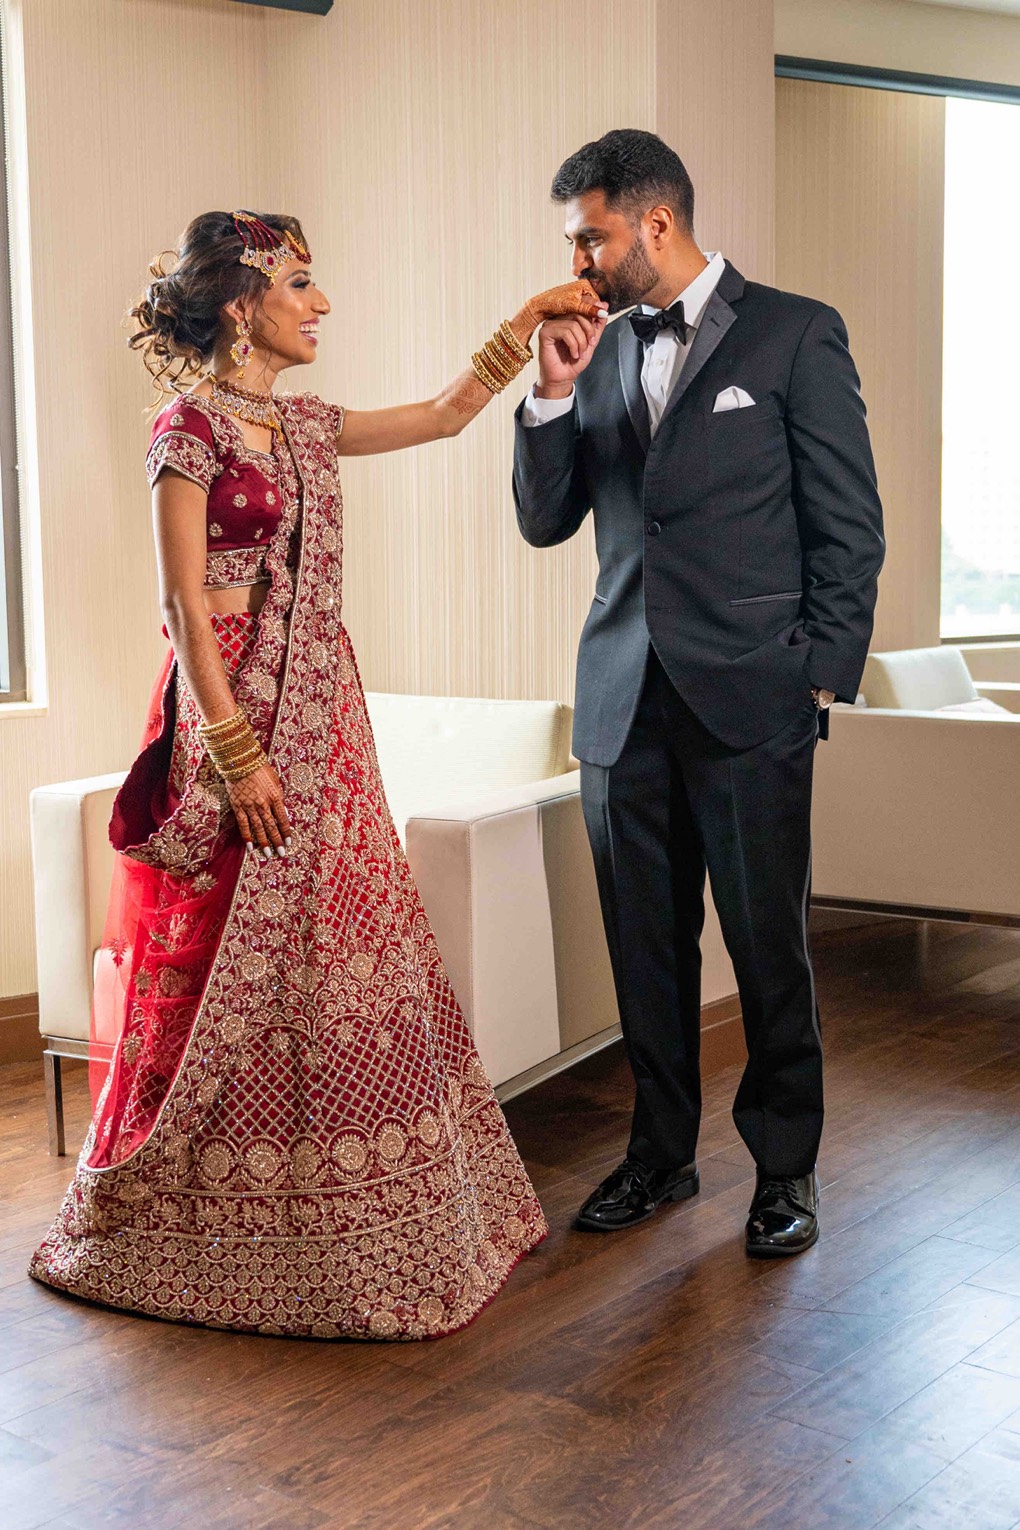 36 Desi Wedding First Look 1020x1530 1